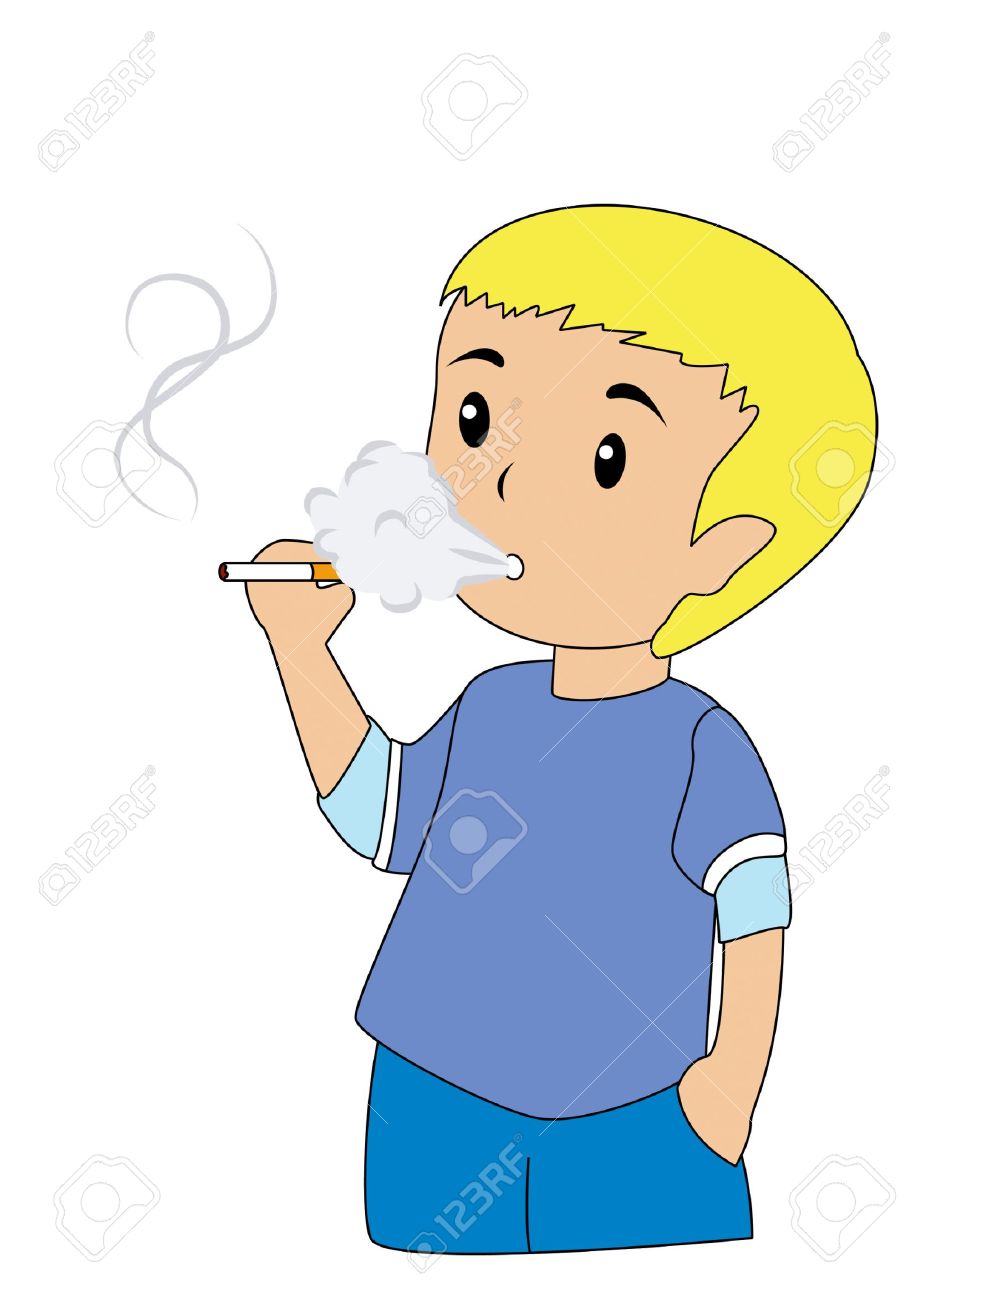 smoking cartoon: Child Smoking | Clipart Panda - Free Clipart Images